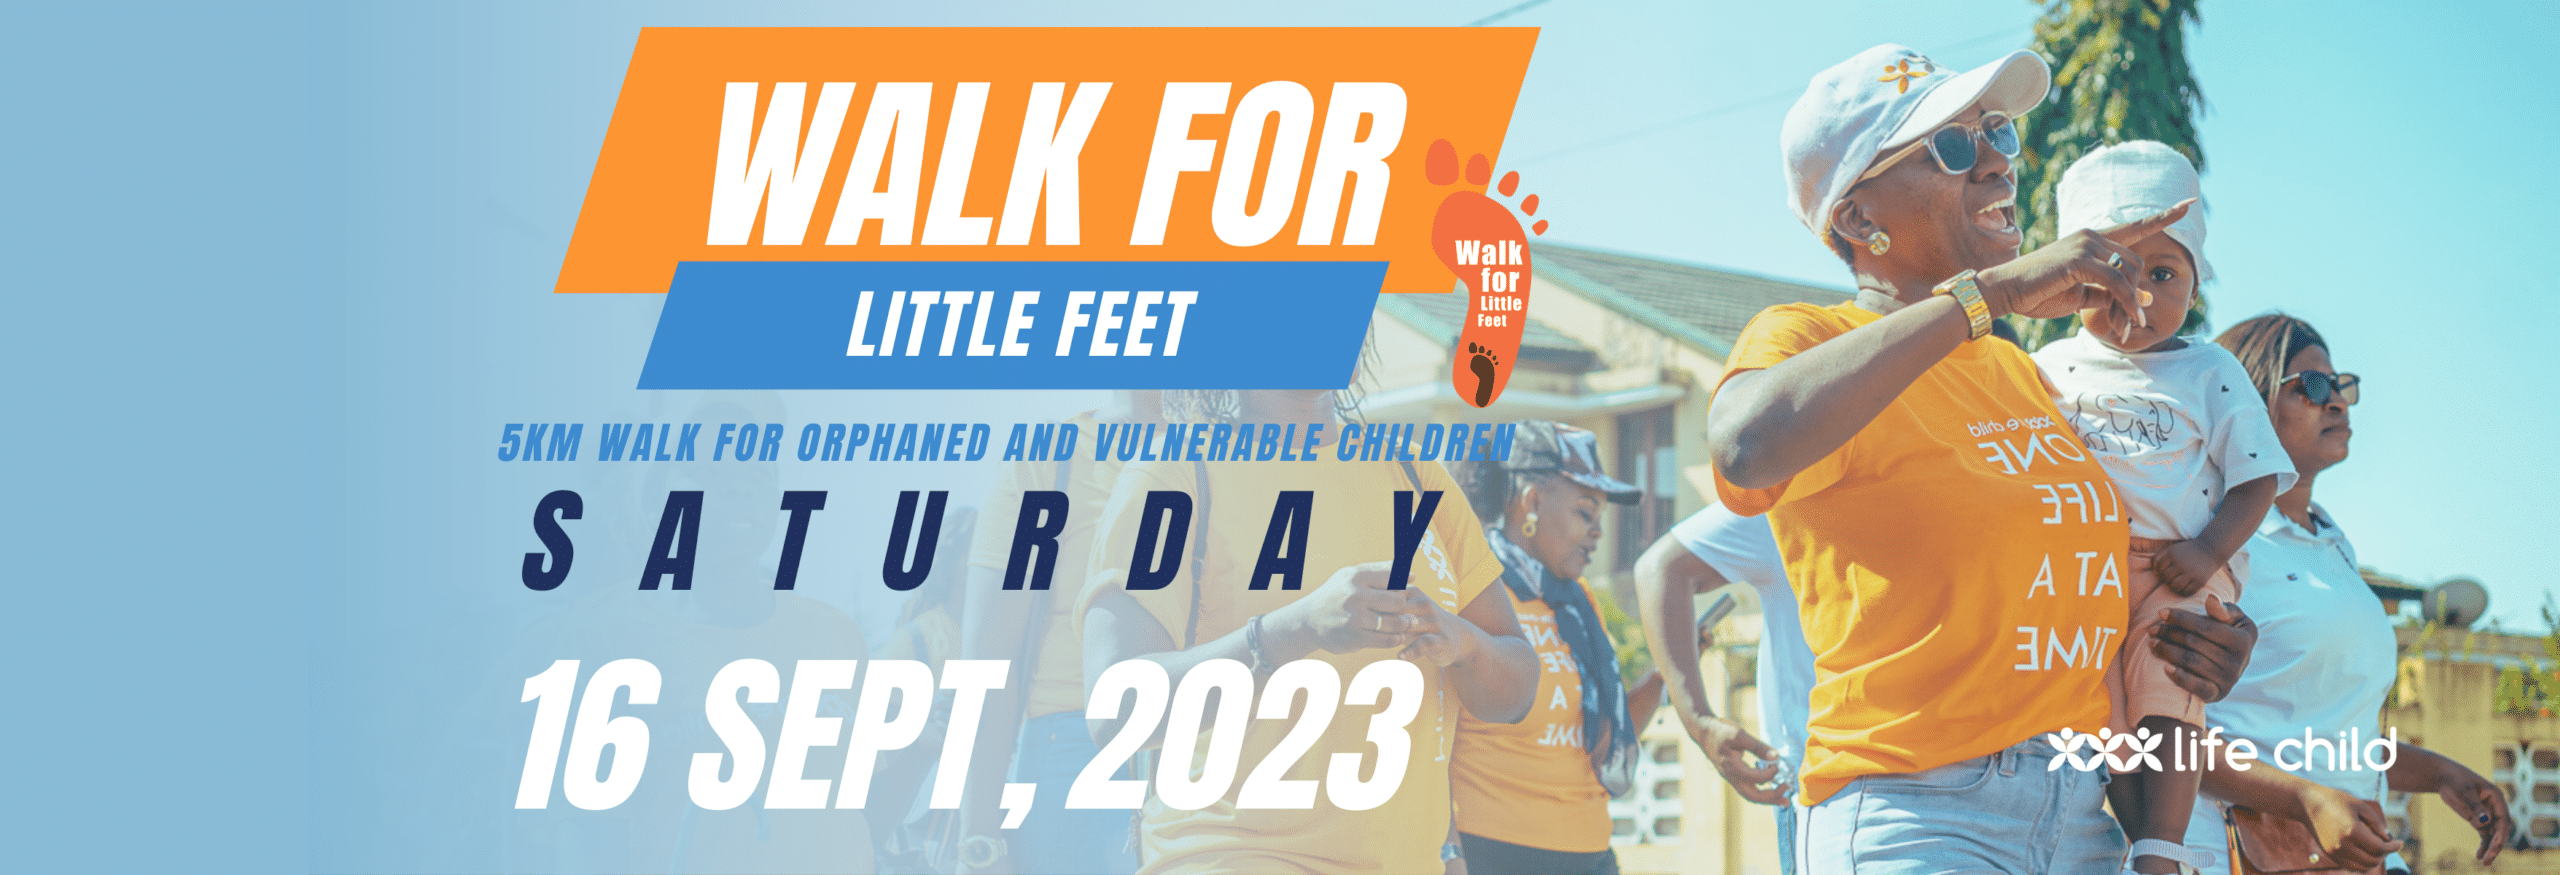 Walk for Little Feet 2023 banner